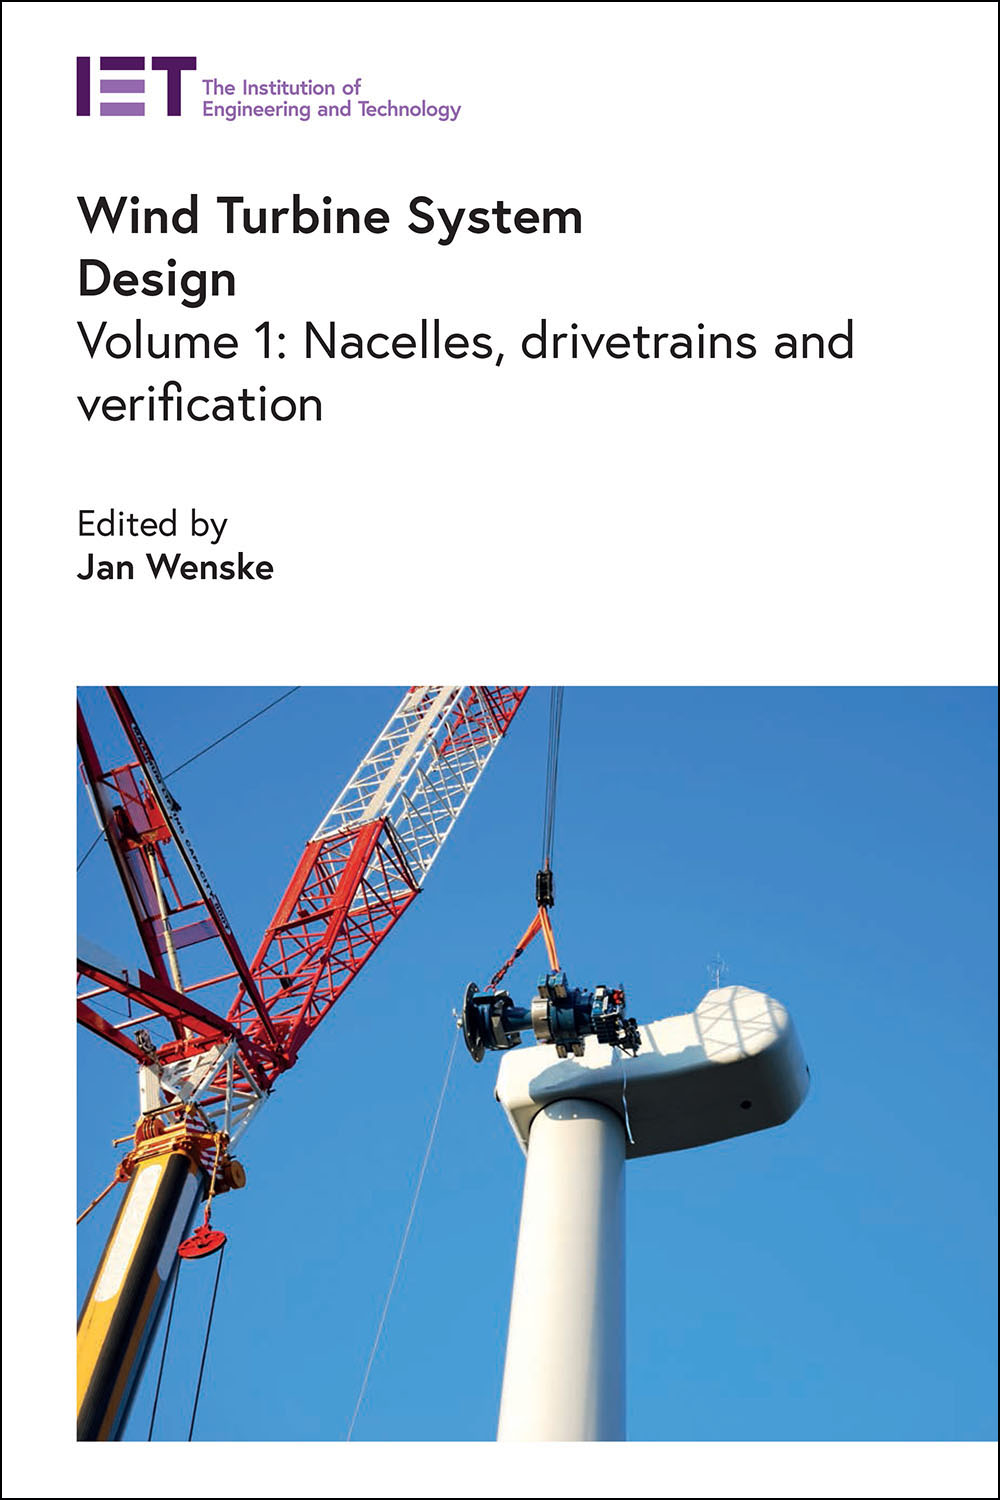 Wind Turbine System Design
Volume 1:Nacelles, drivetrains and verification